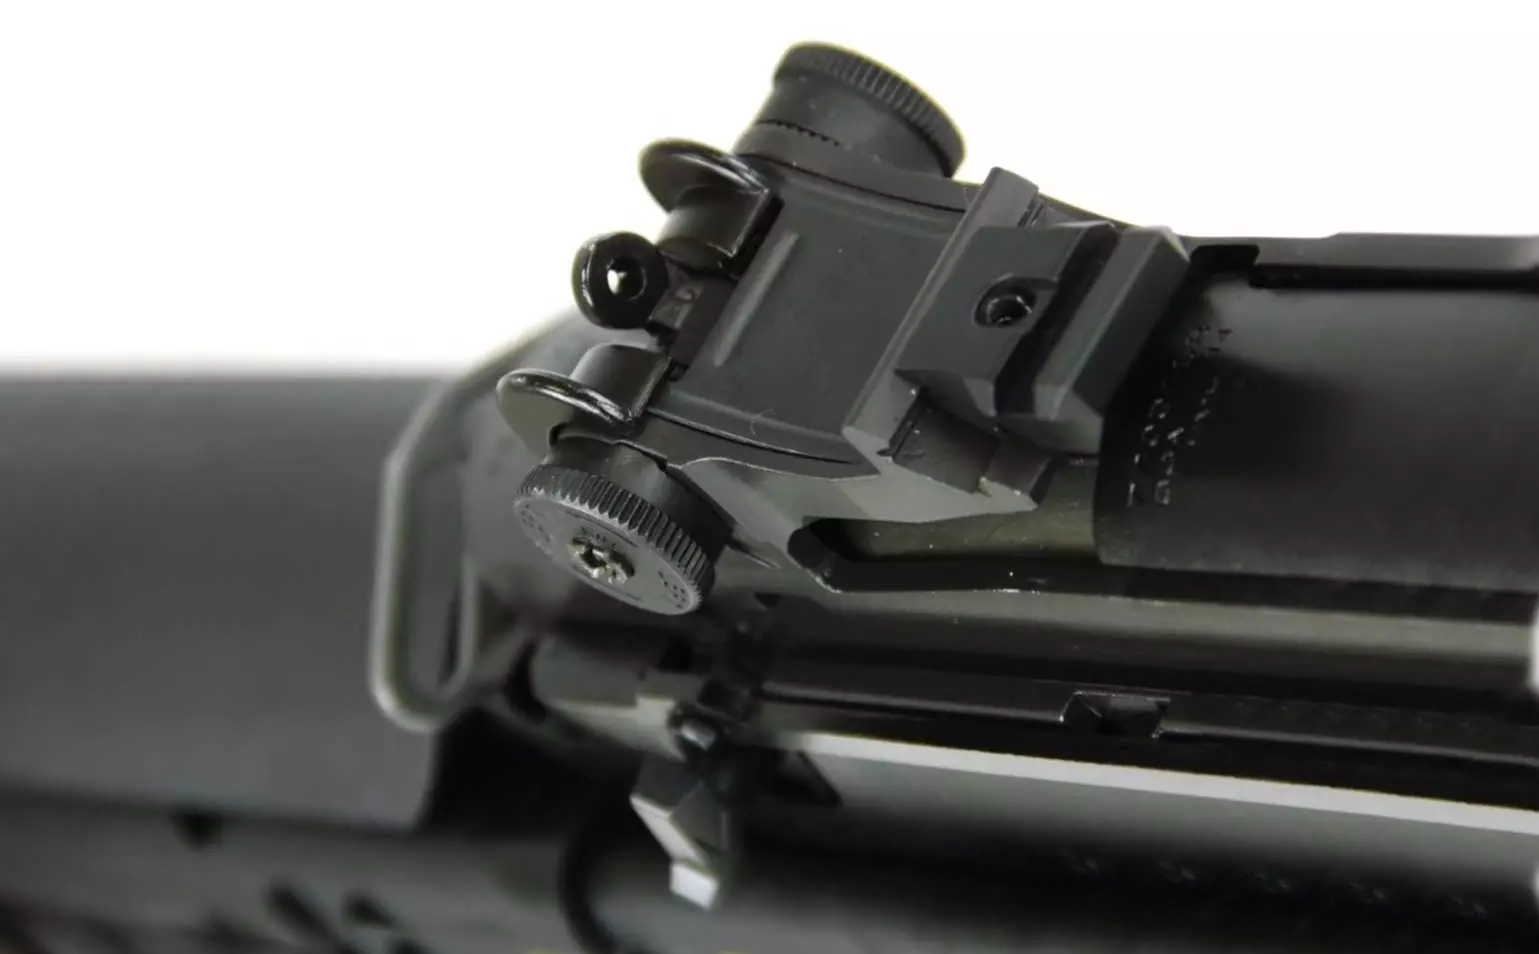 M14 laser tag sniper gun sighting